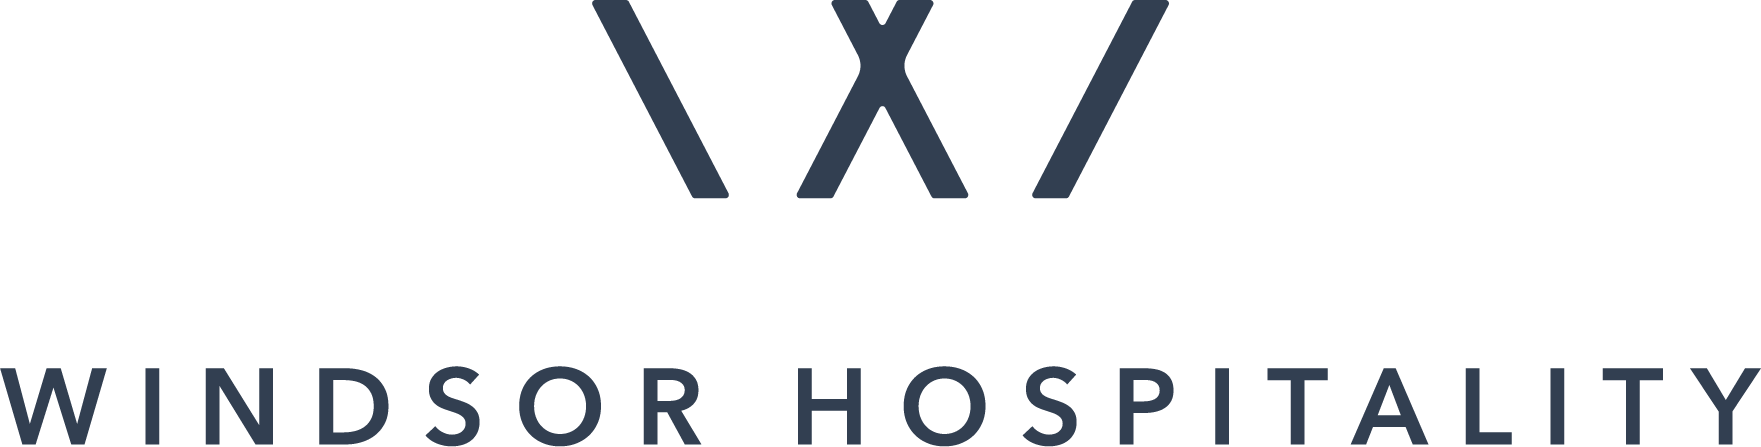 hospitality logo